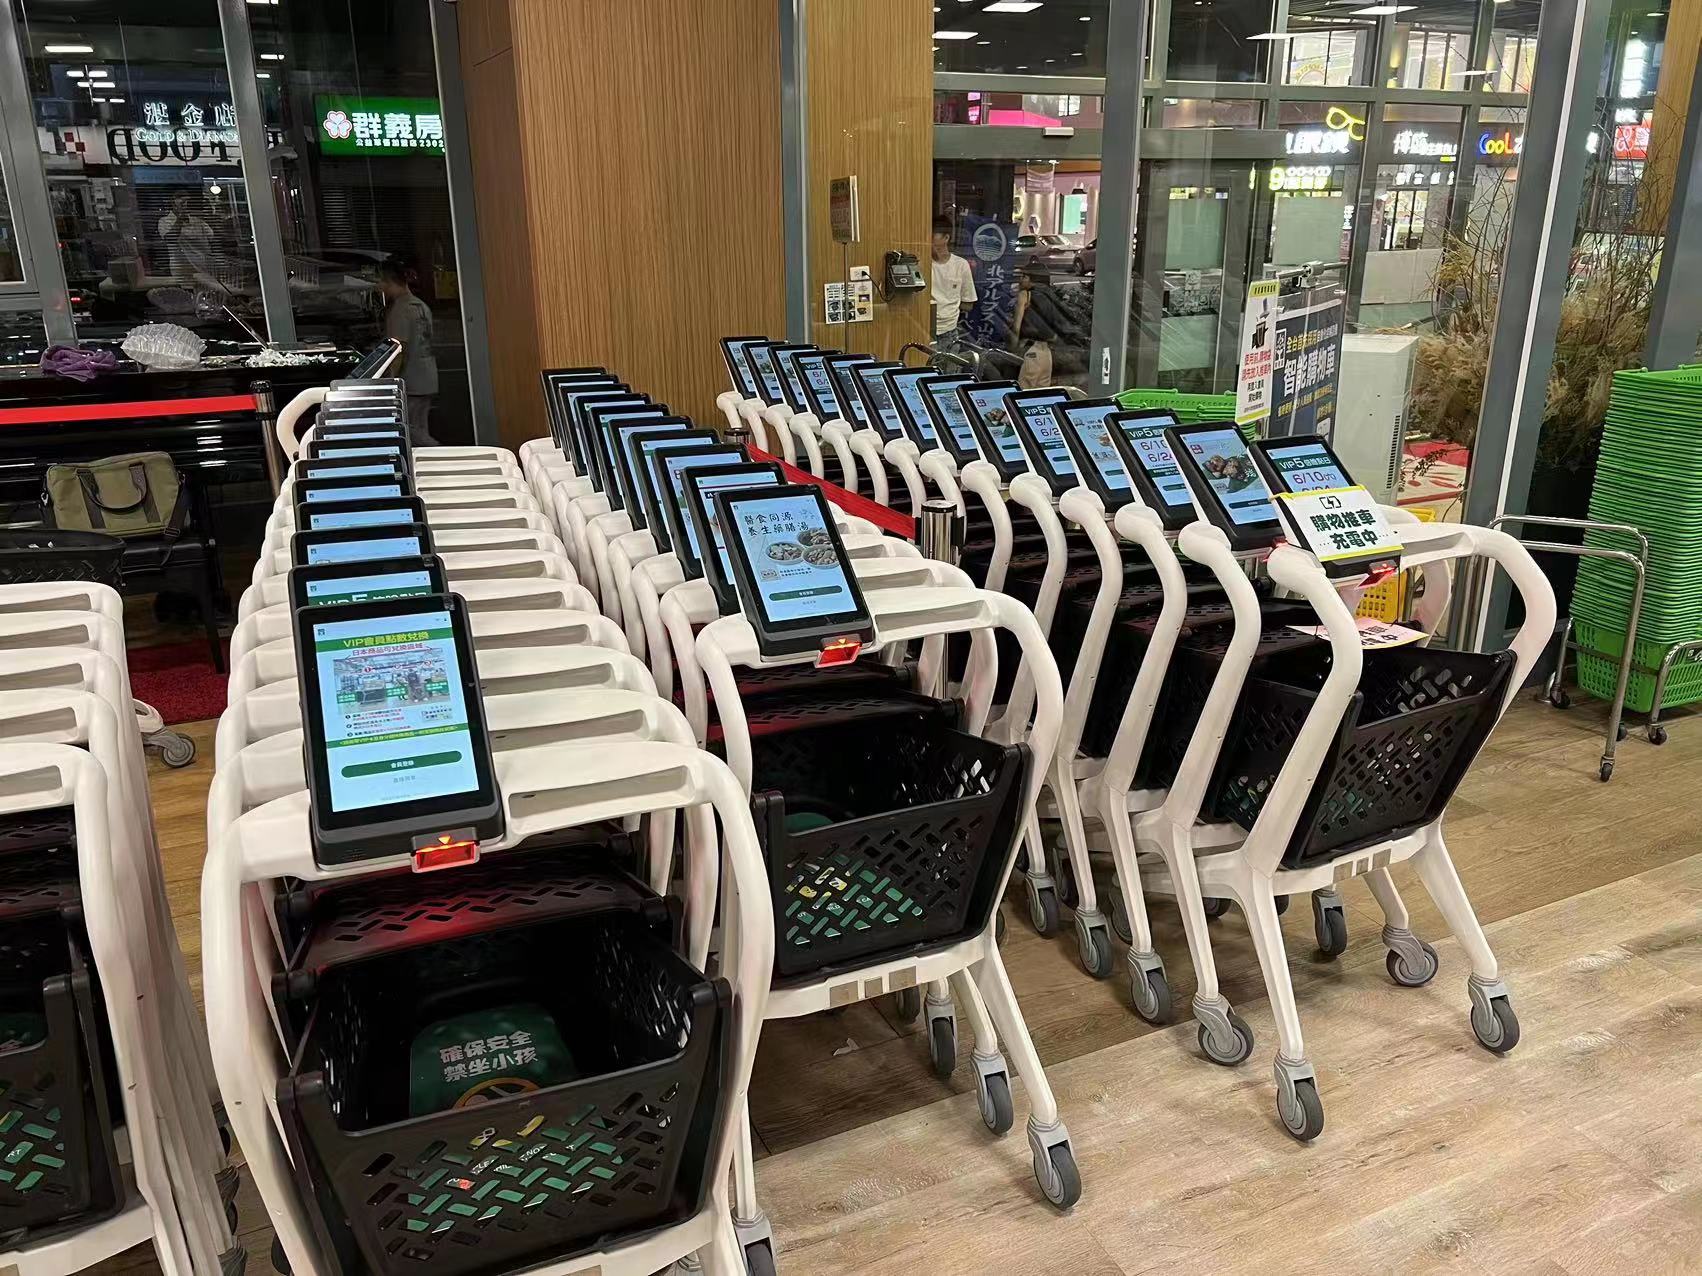 Taiwan Supermarket Yumaowu brought in SuperHii smart grocery carts 